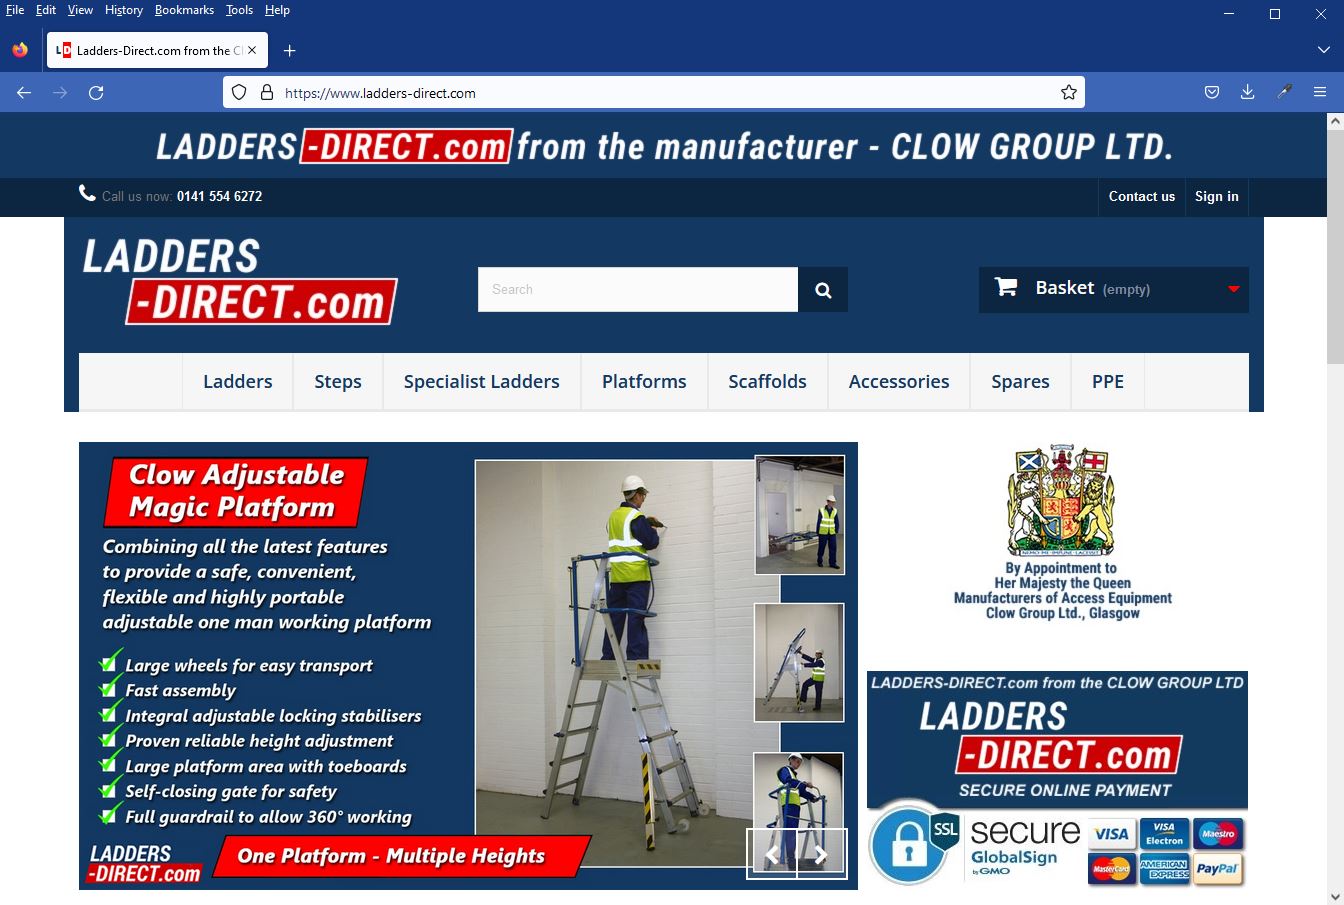 Ladders-Direct.com website